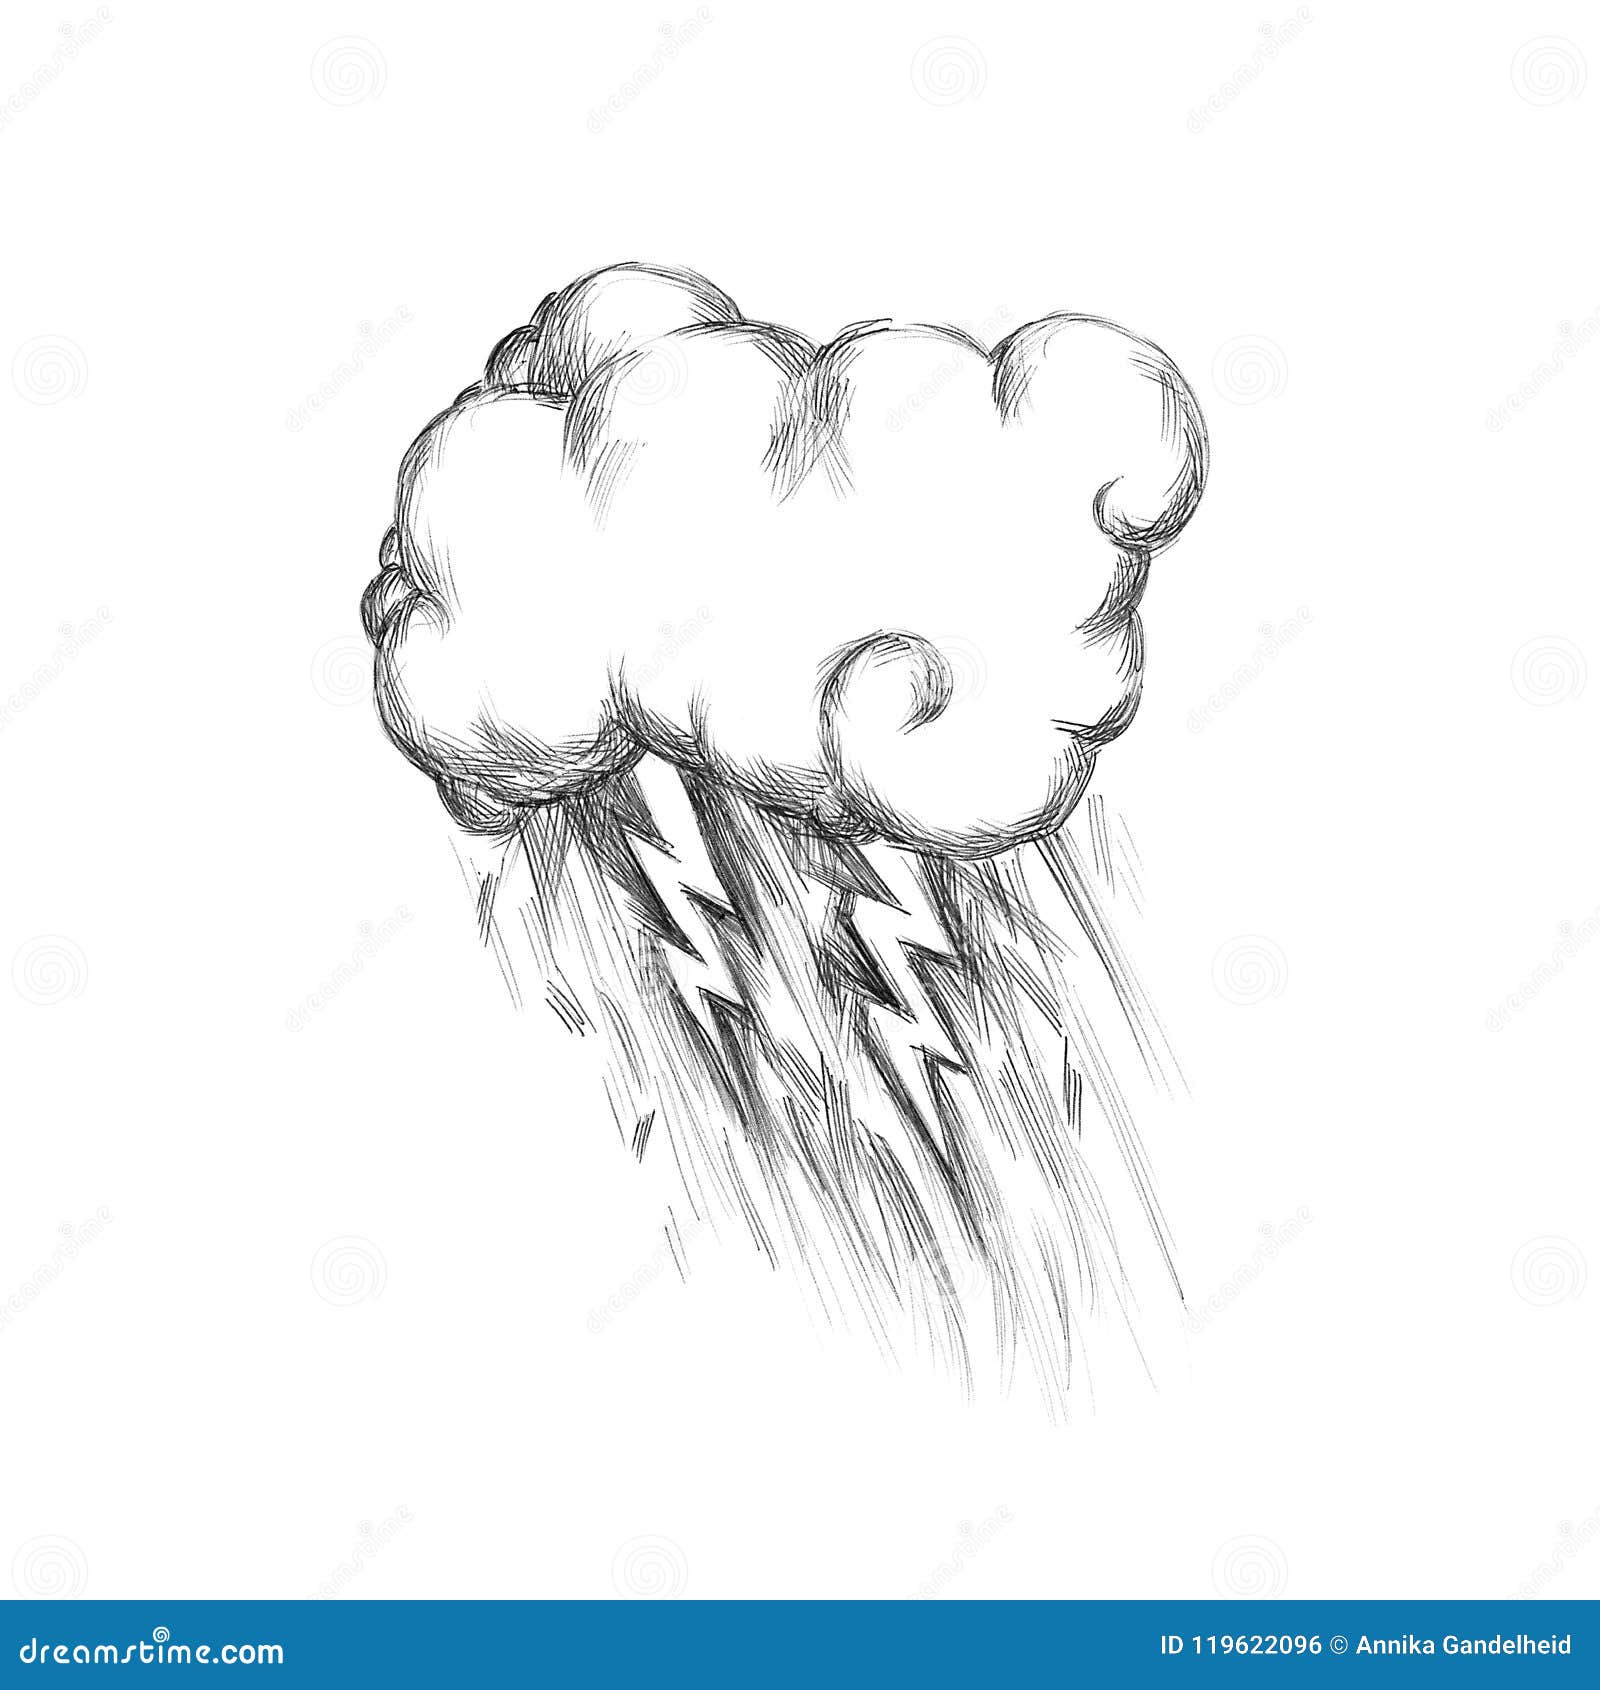 Storm Cloud Sketch